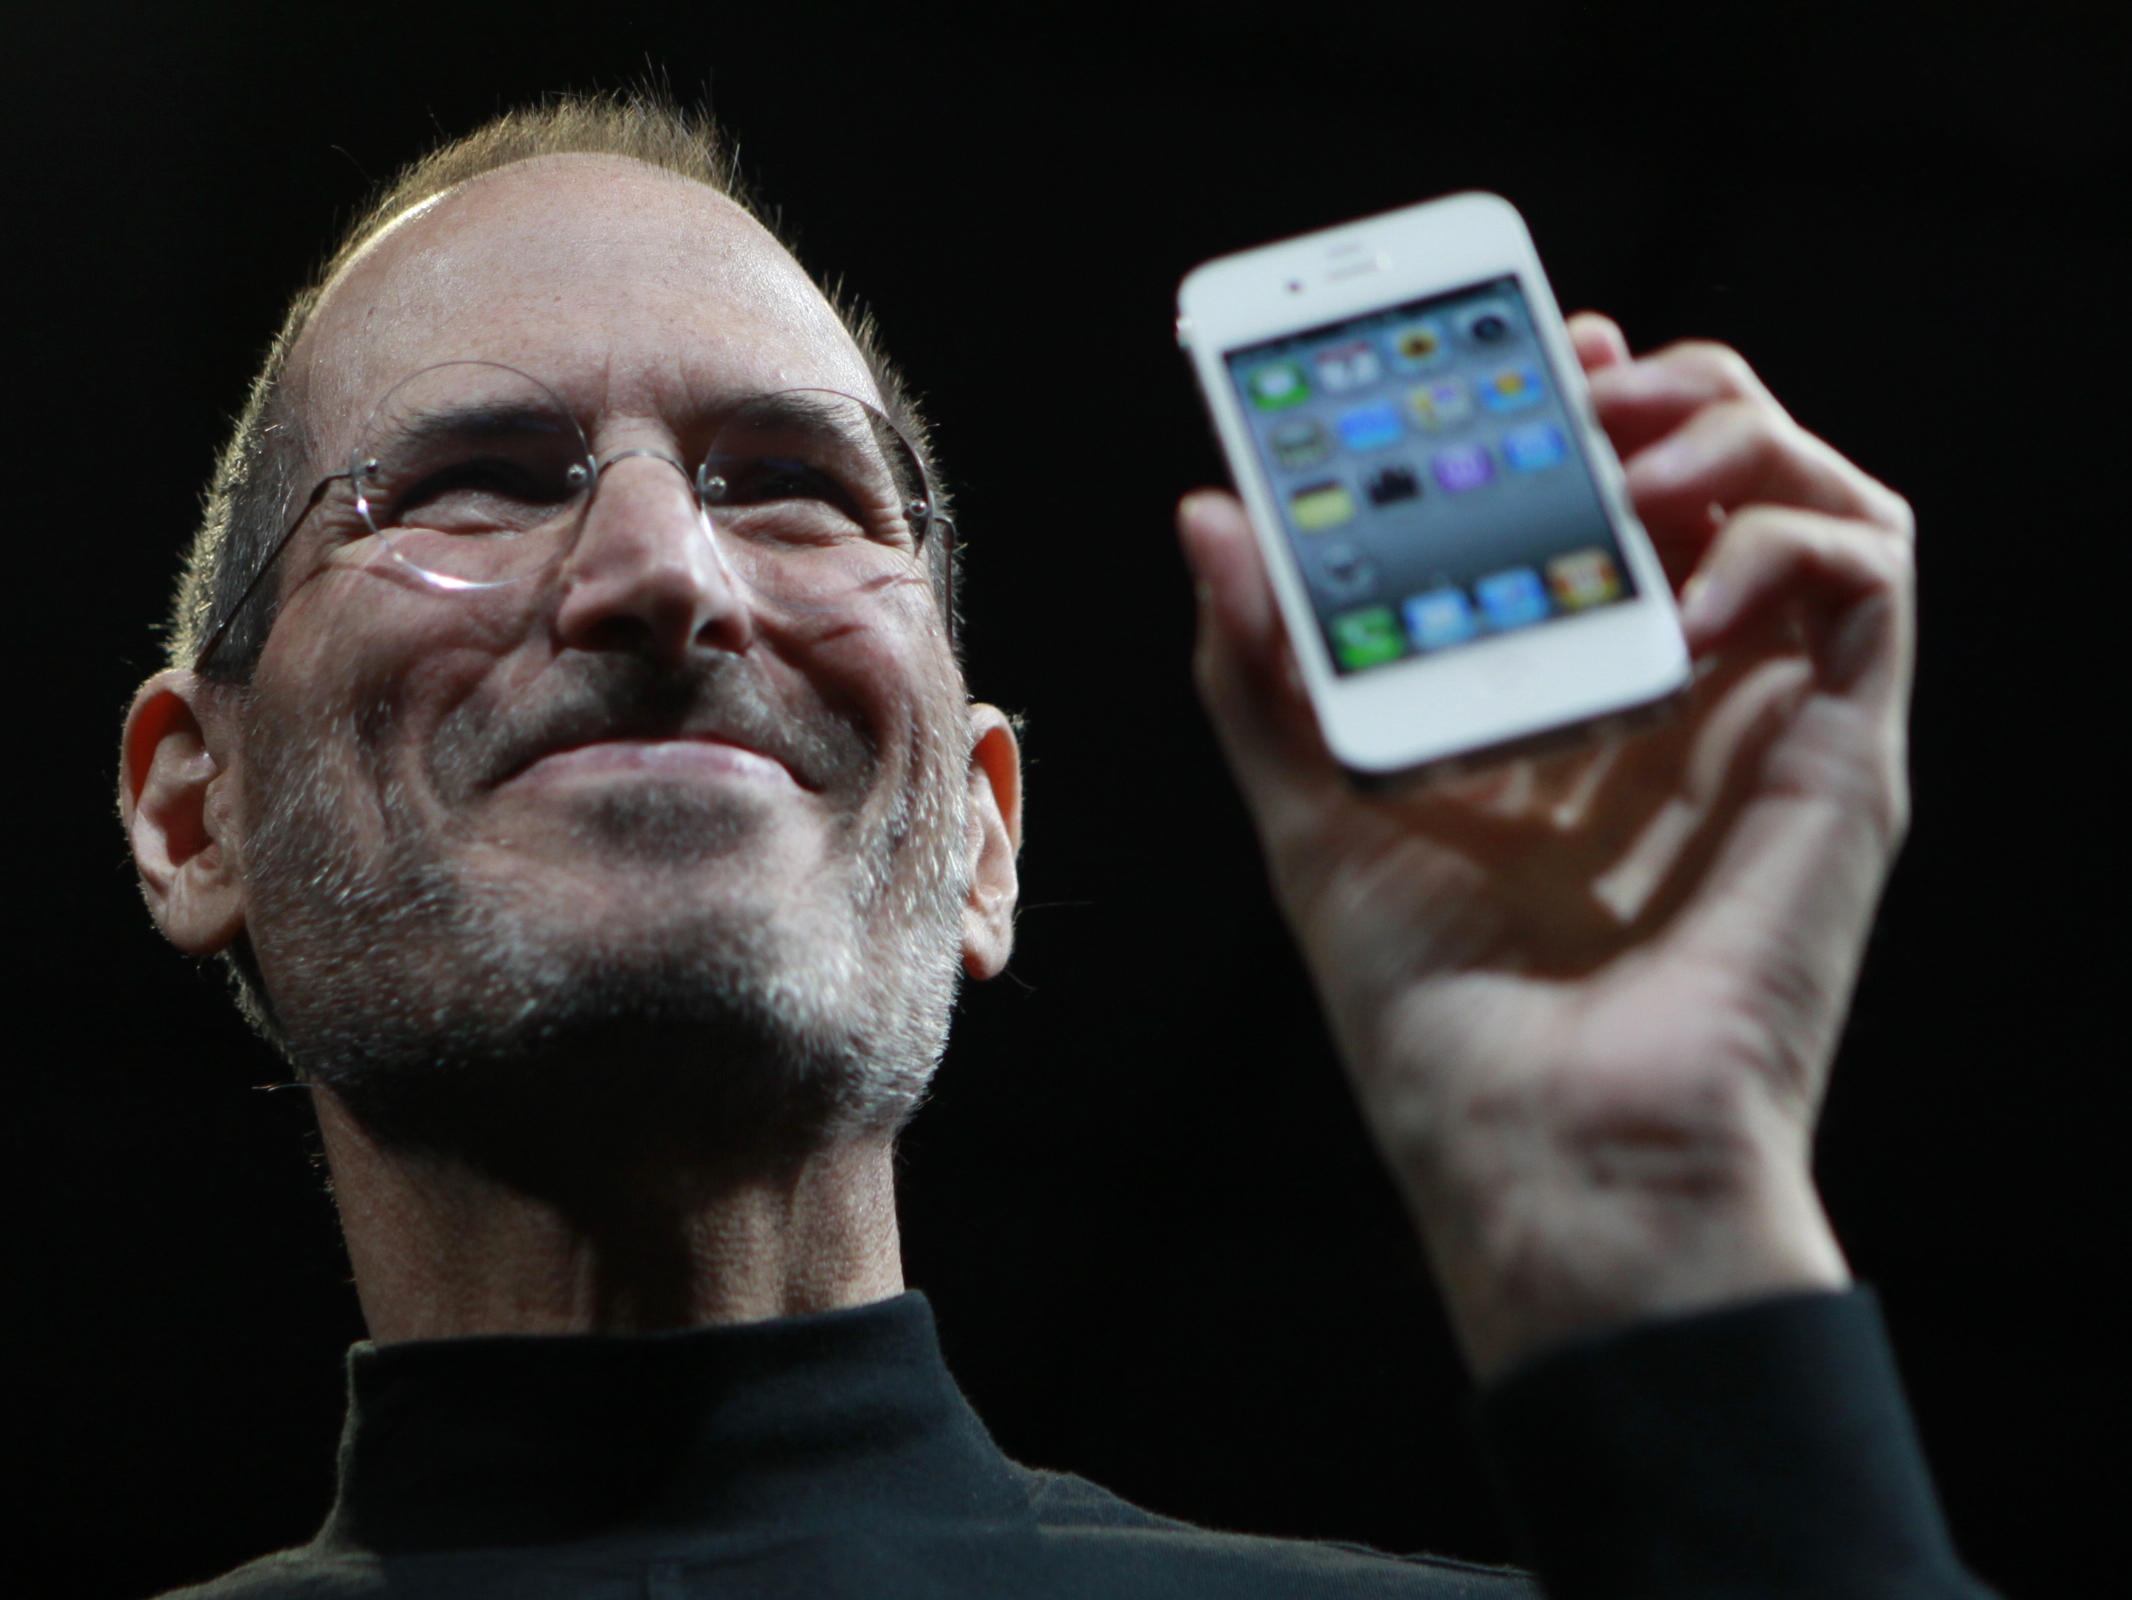 Iphone, Norge, Bergen, Steve Jobs